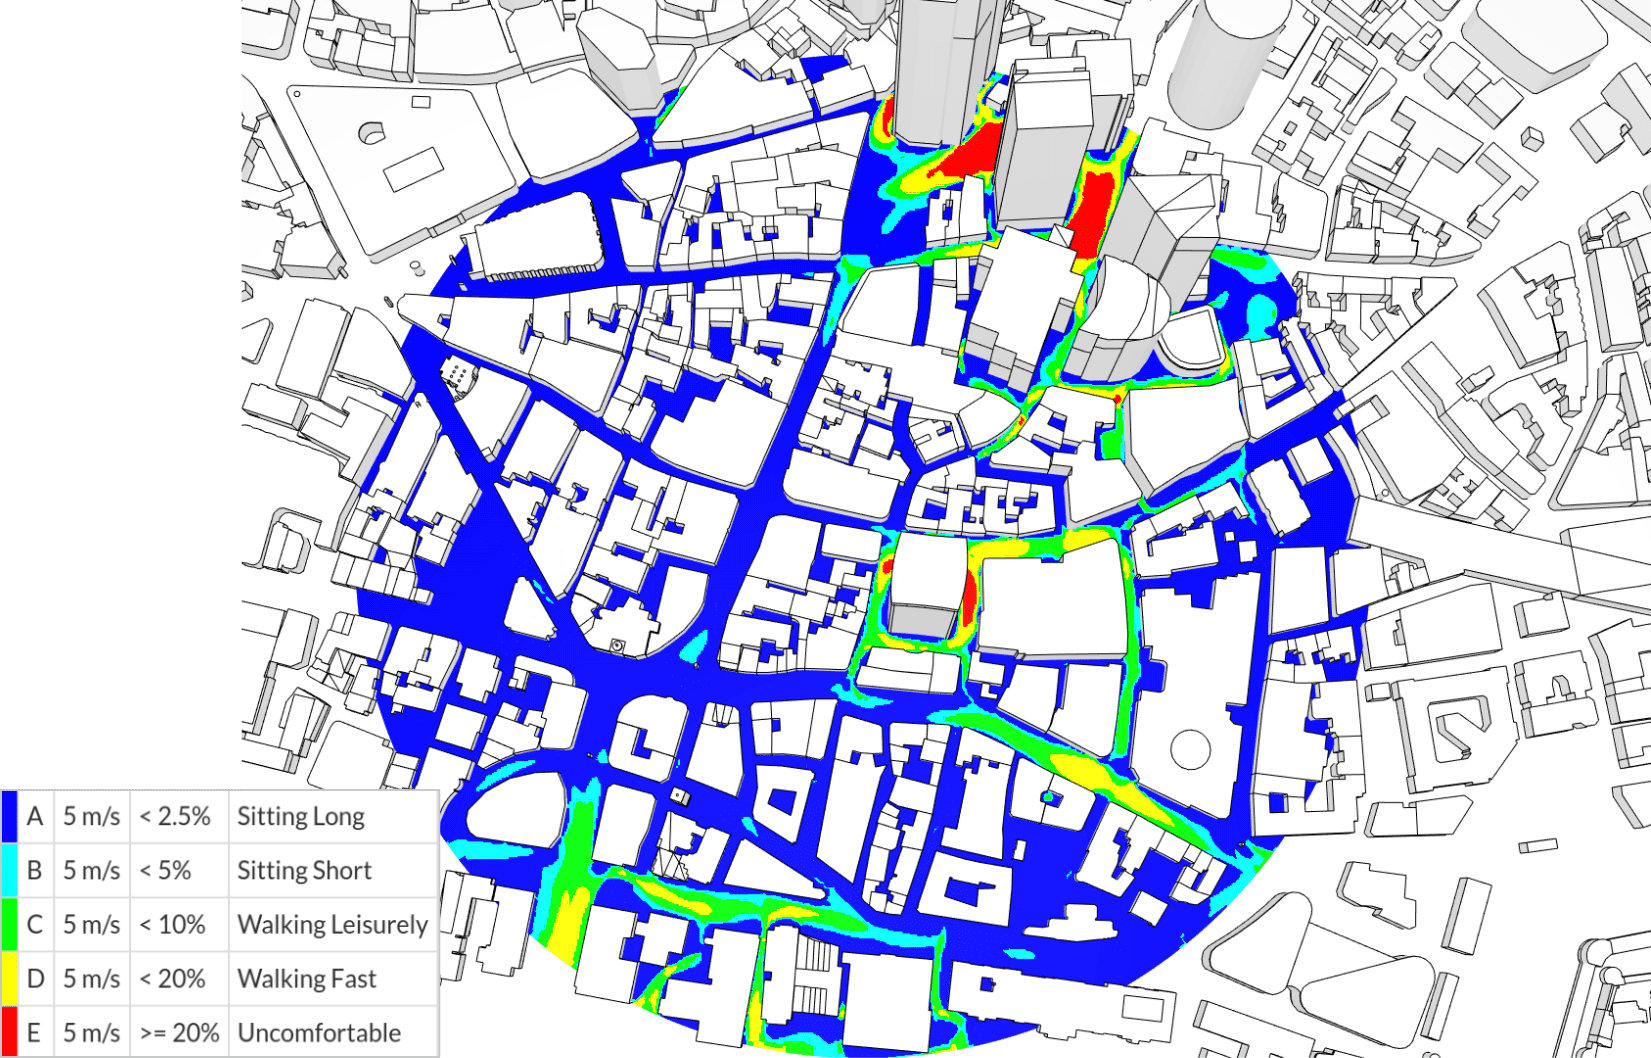 Pedestrian wind comfort simulation of Central London around the 20 Fenchurch Street building using NEN 8100 comfort criteria